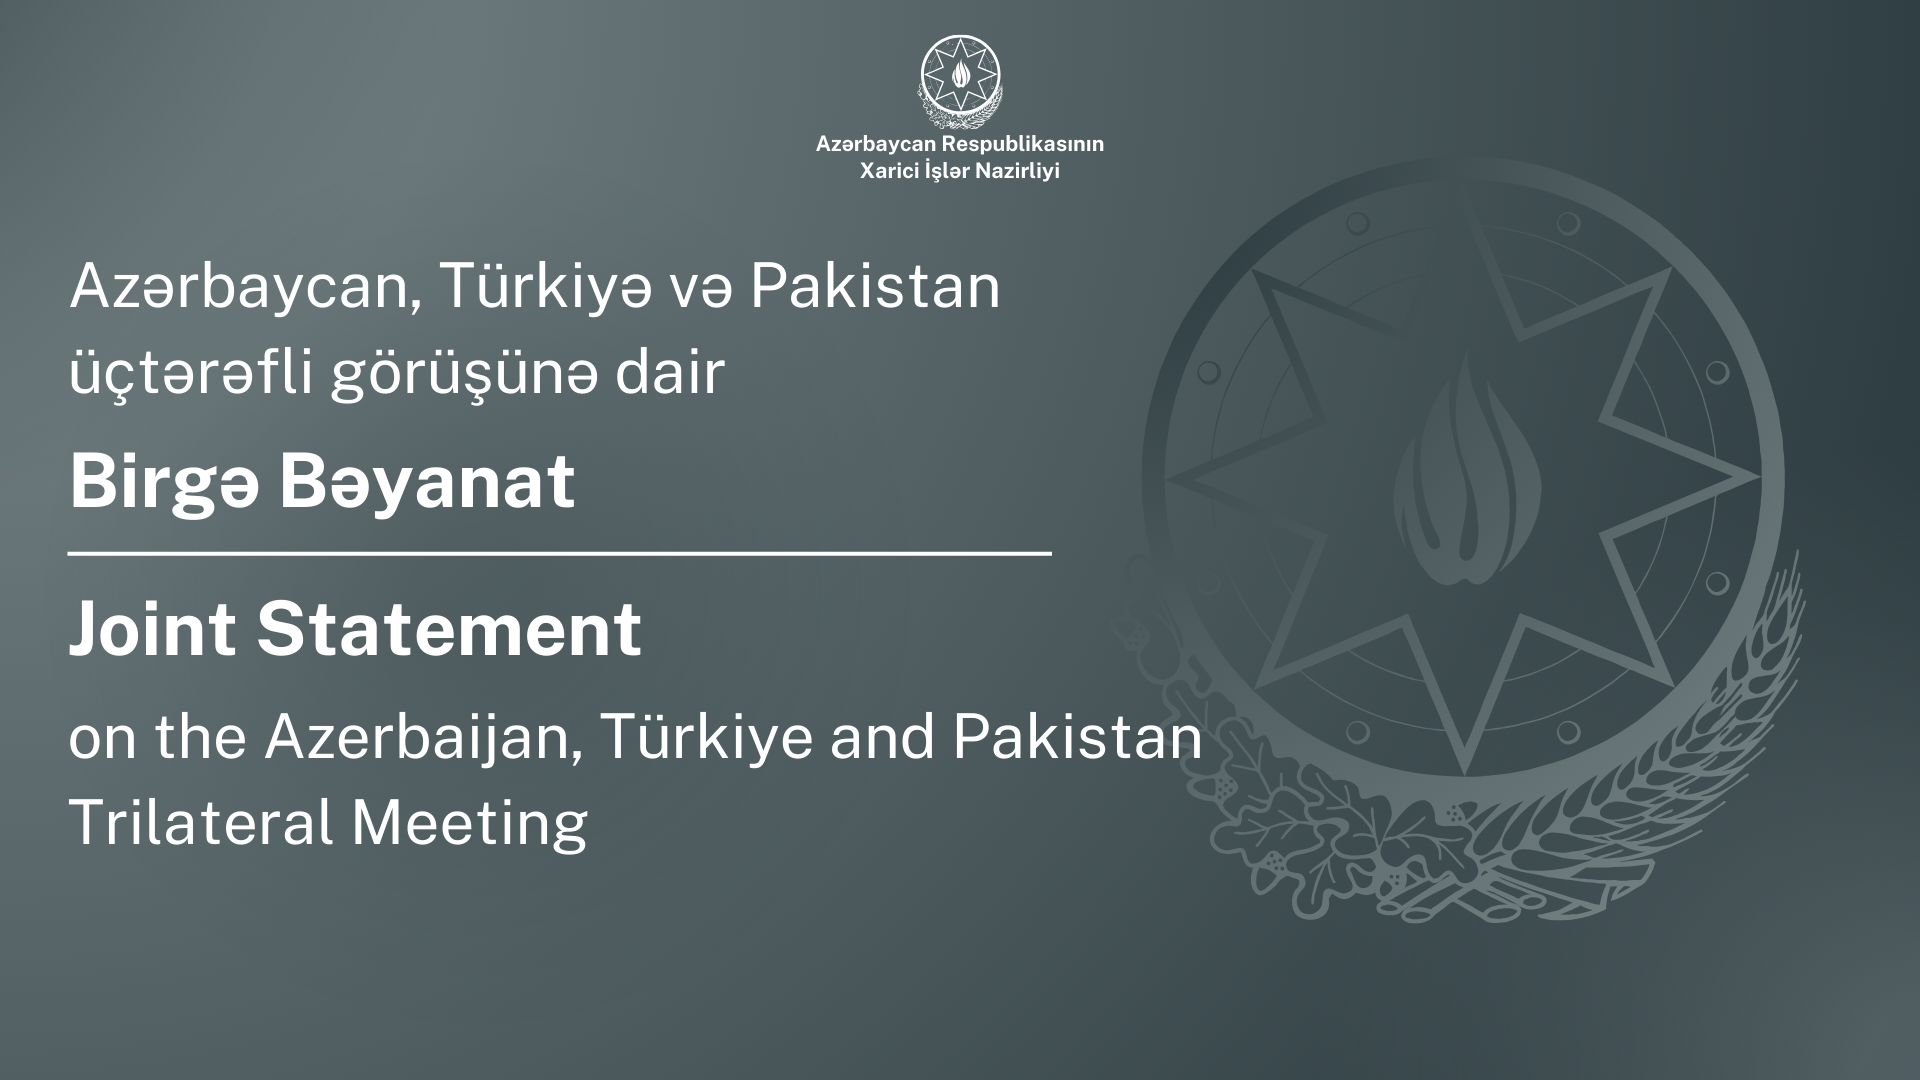 No:282/24, Joint Statement on the Azerbaijan, Türkiye and Pakistan Trilateral Meeting Xeber basligi